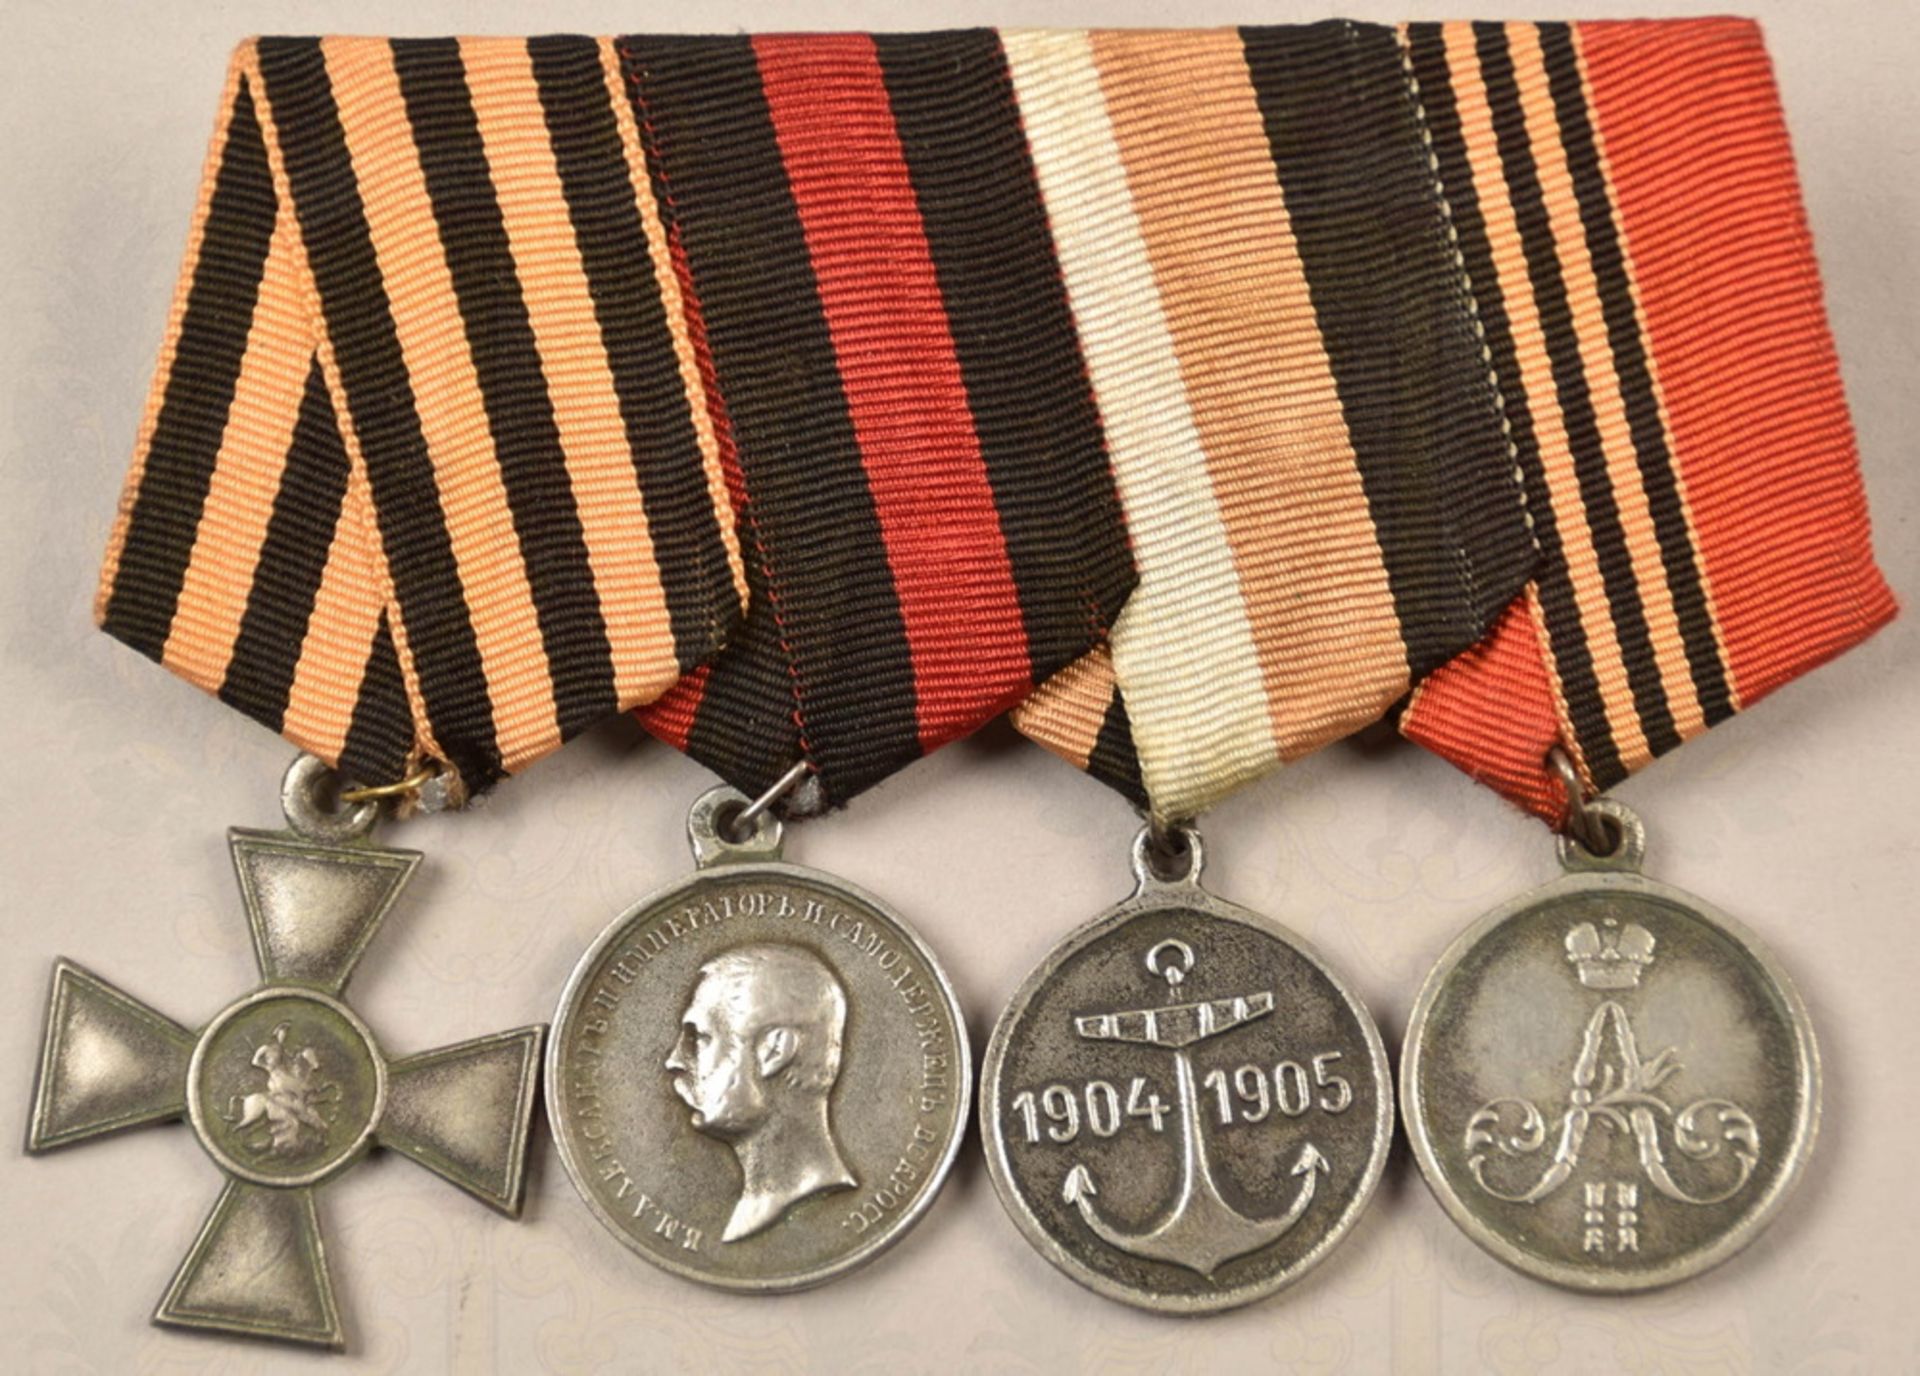 Tsarist Russian medal clasp